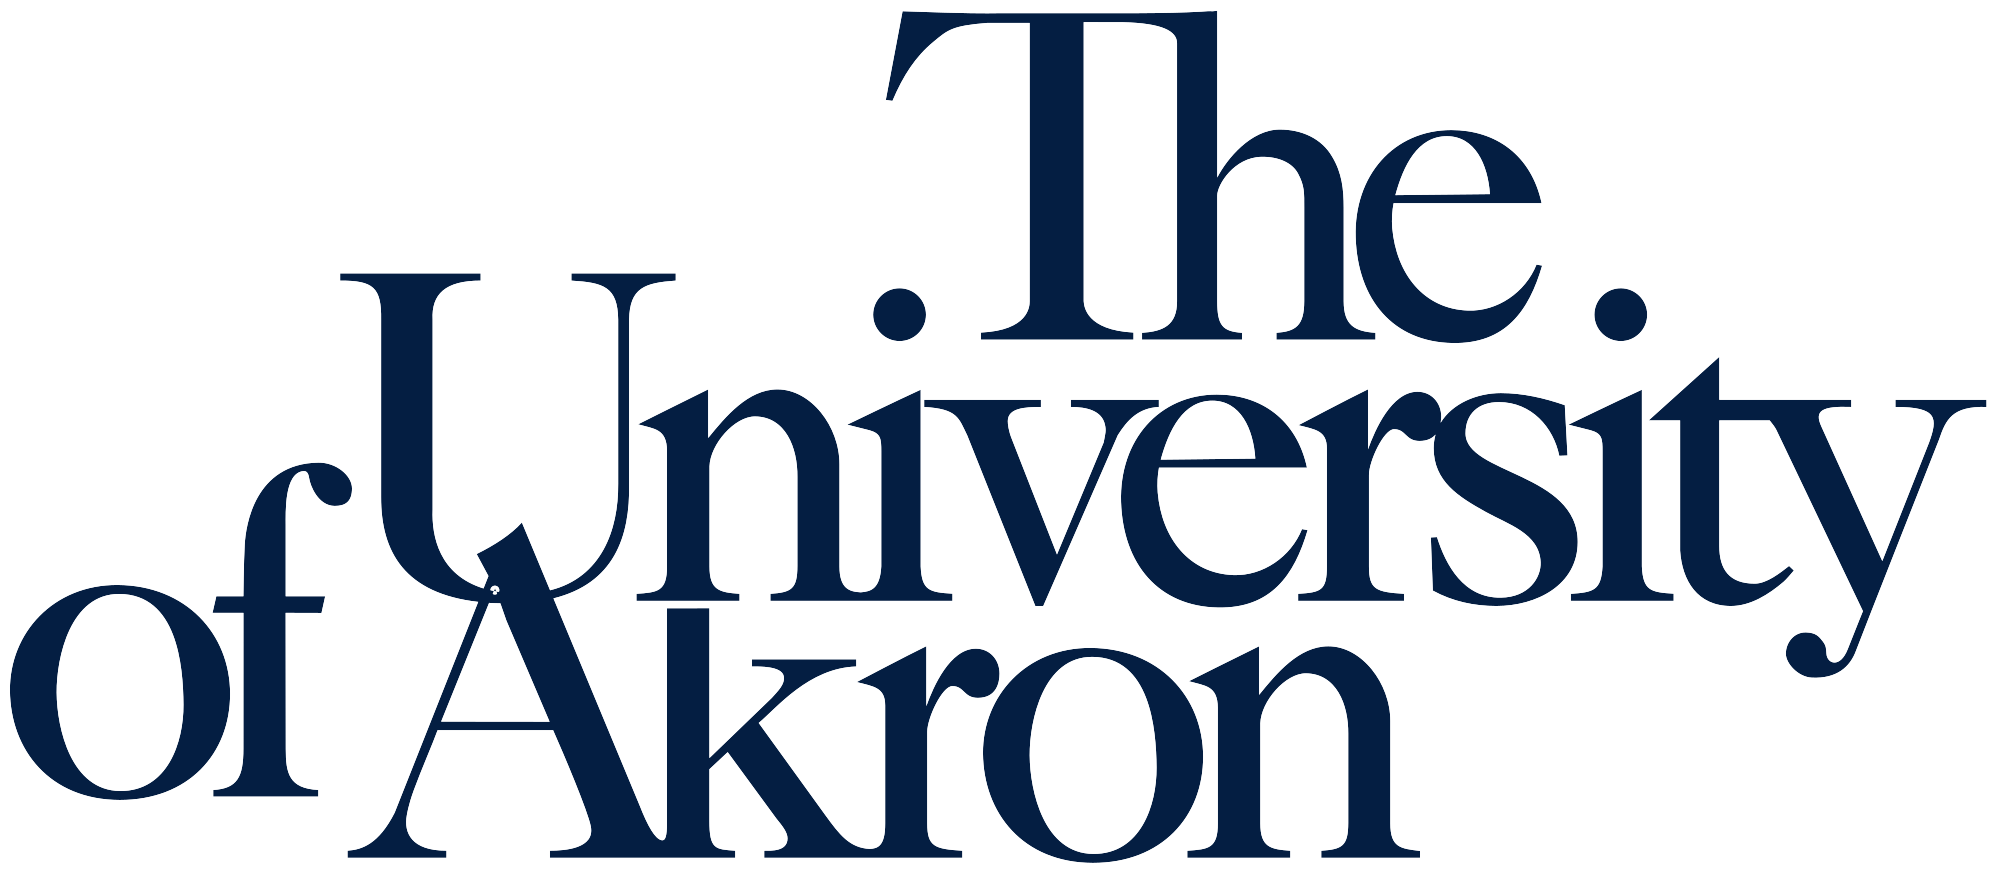 sociology Akron logo